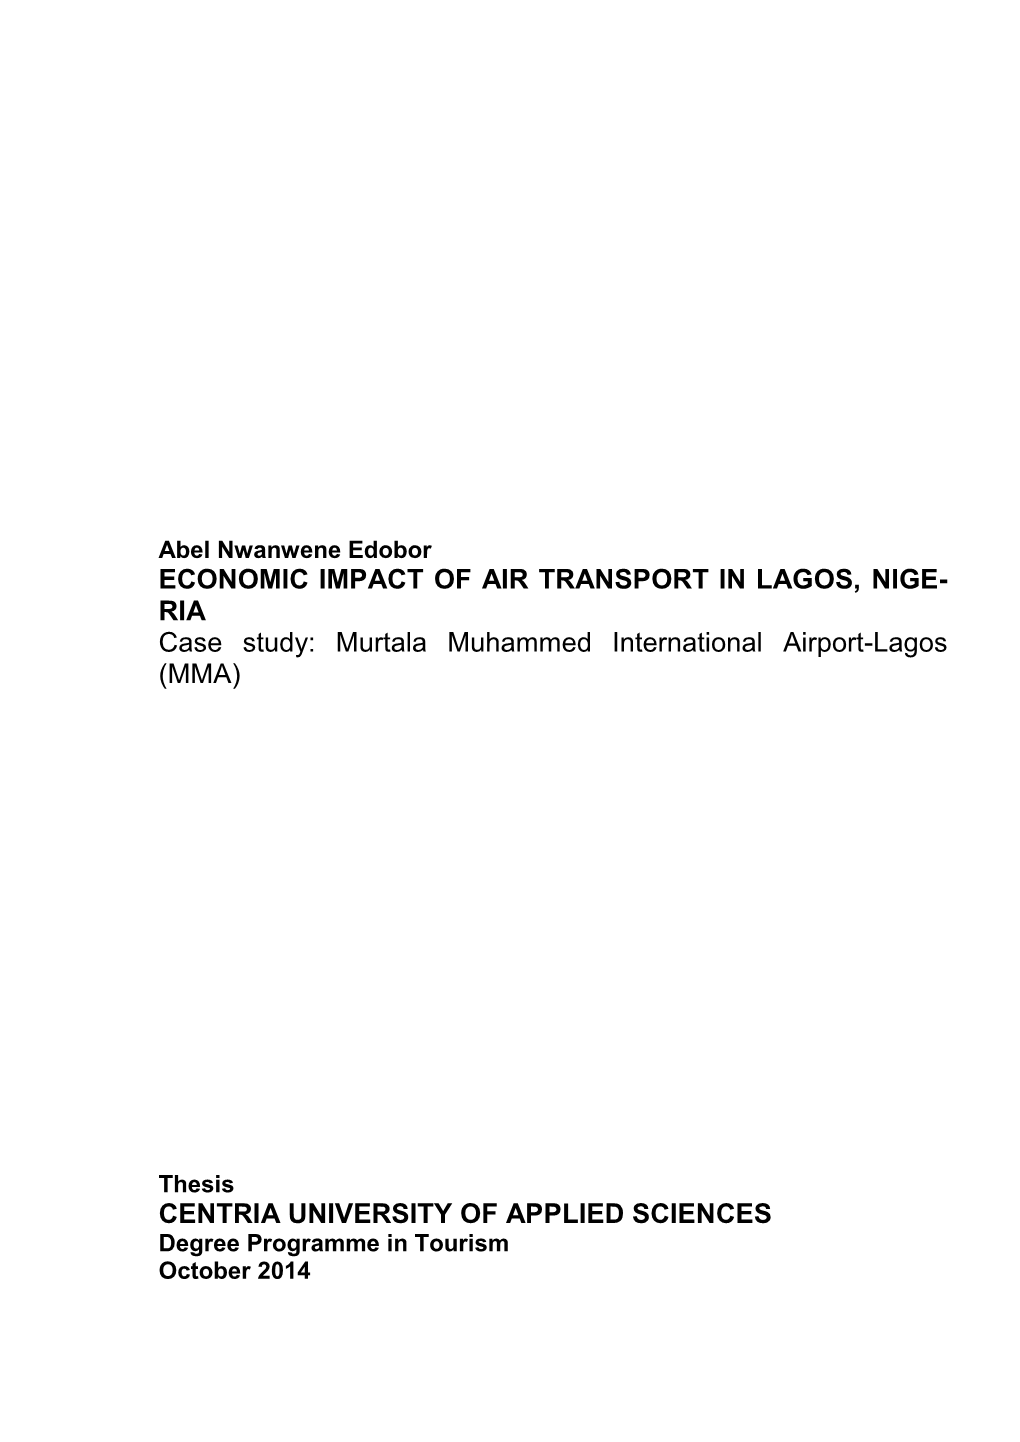 Murtala Muhammed International Airport-Lagos (MMA)